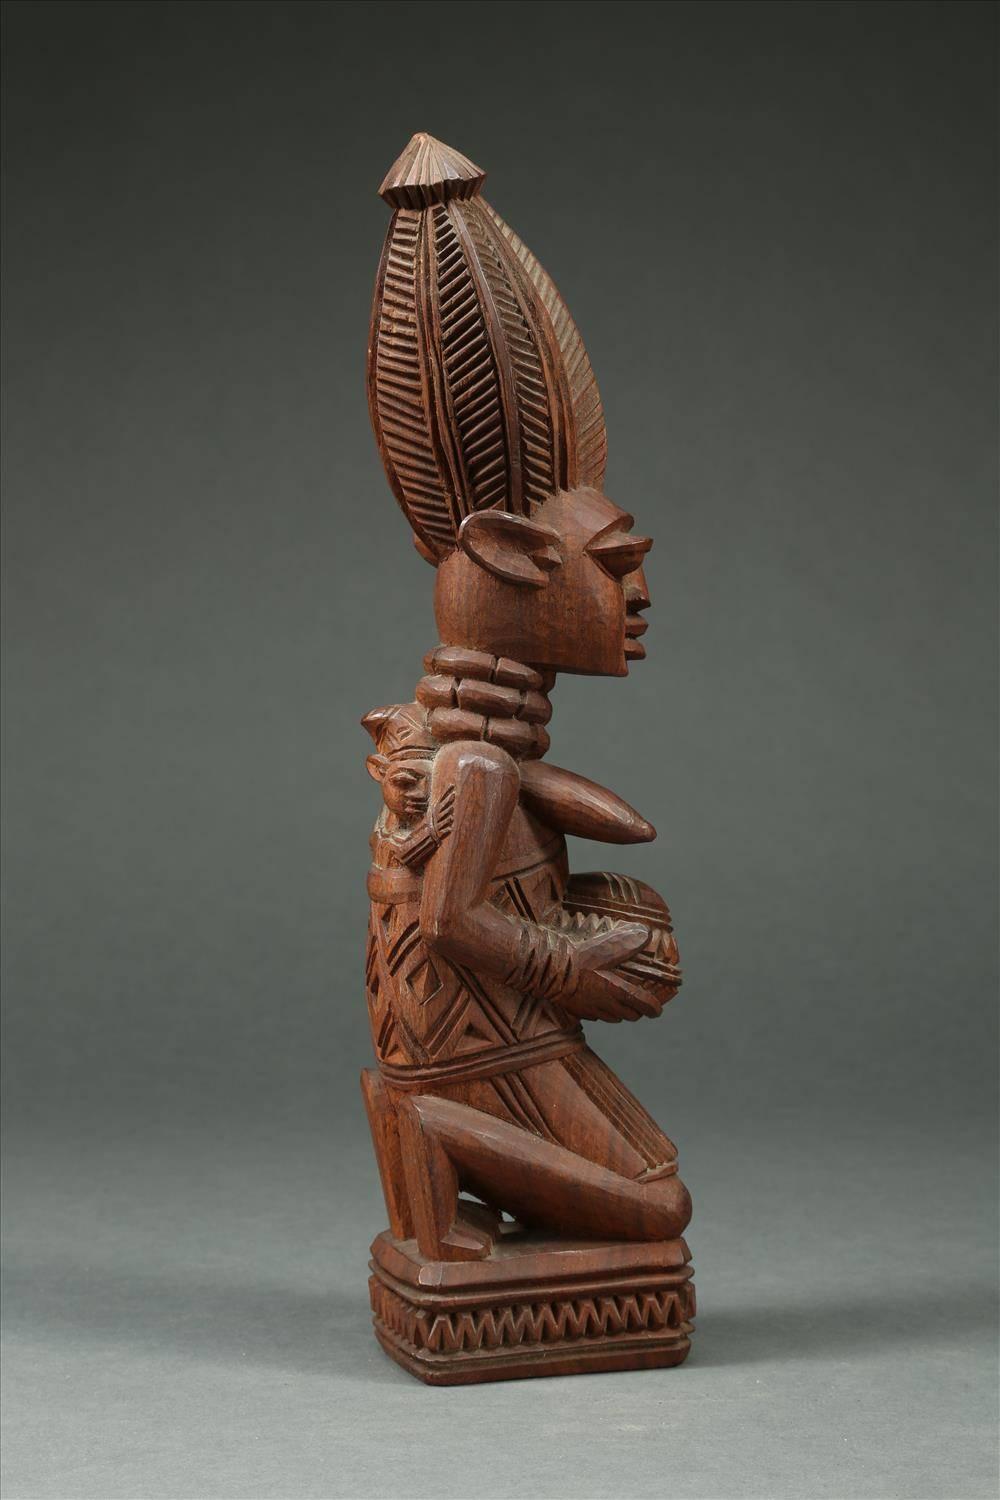 Hand-Carved Tribal Yoruba Maternity Figure holding a Bowl, Signed J.A. Fakeye, Nigeria